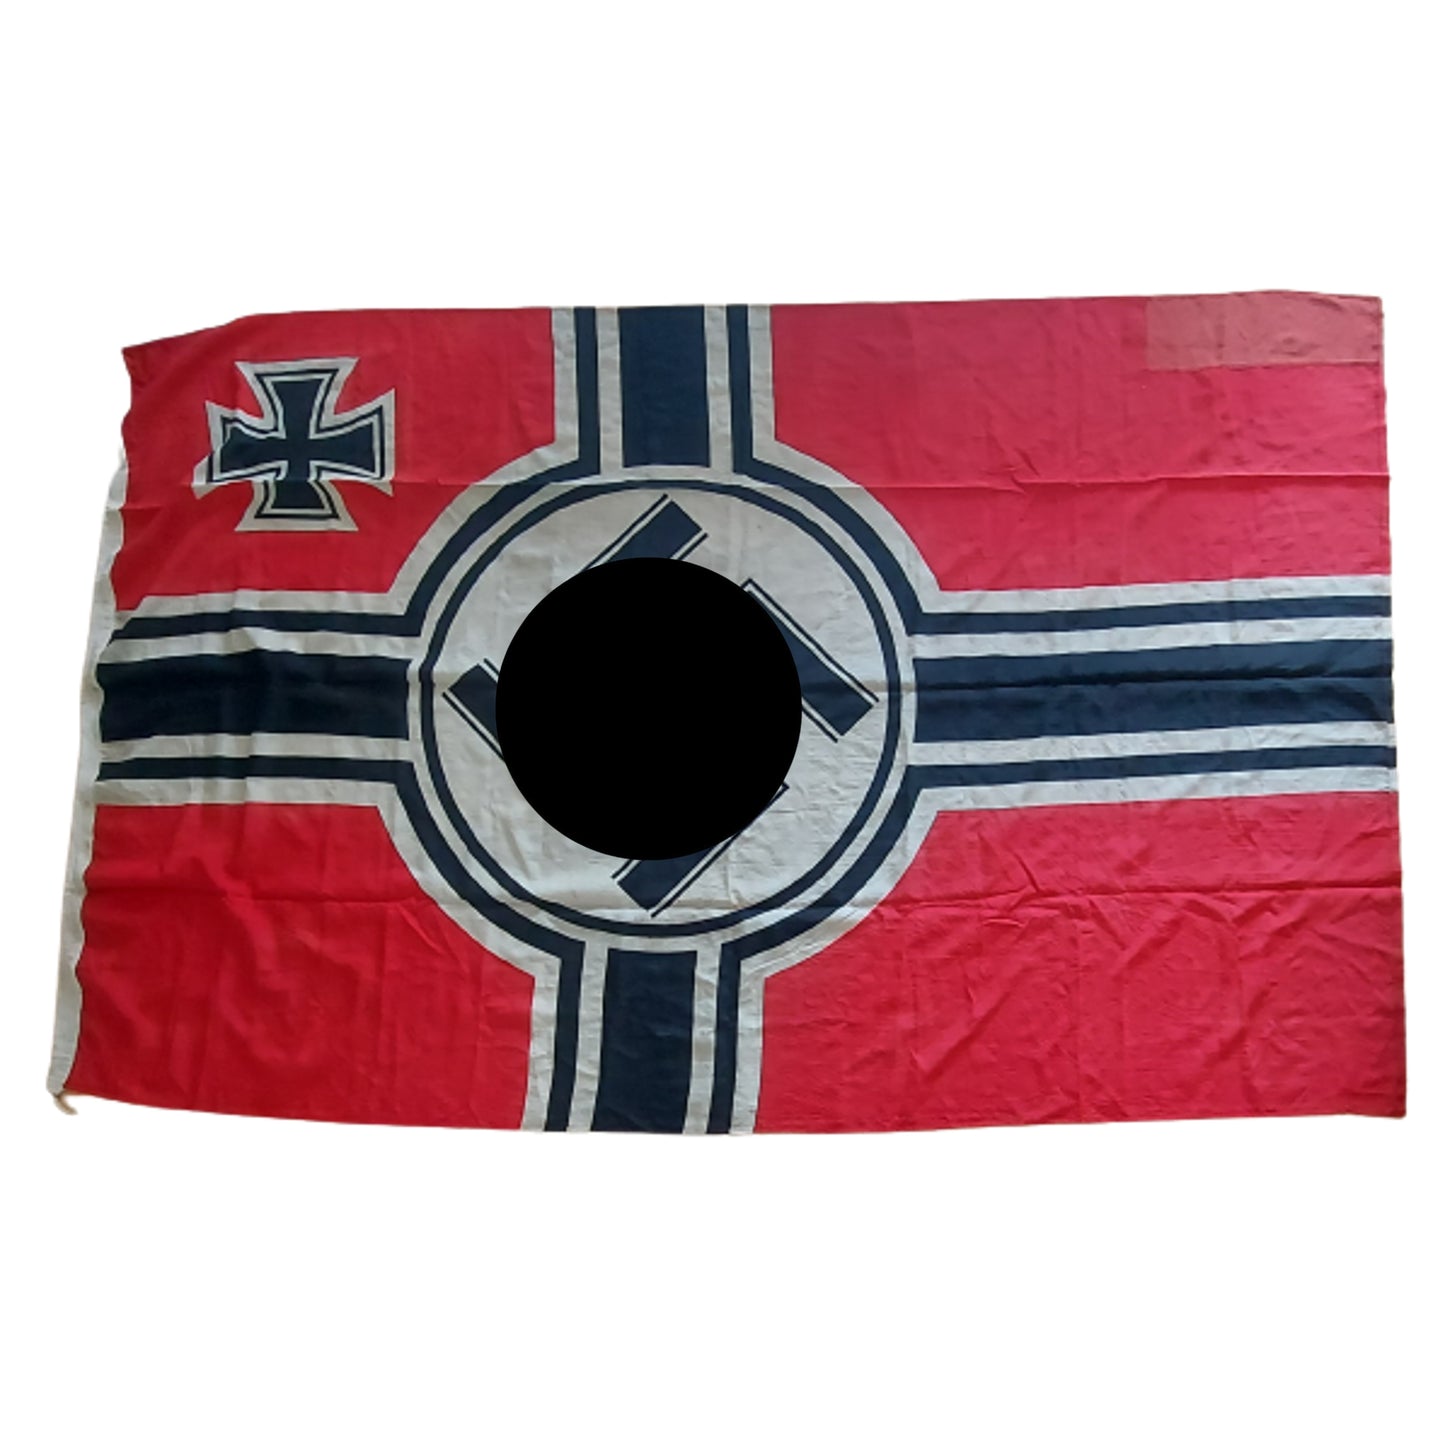 WW2 German Kriegsmarine National War Flag (Reichskriegsflagge) 78  x 132 Inches